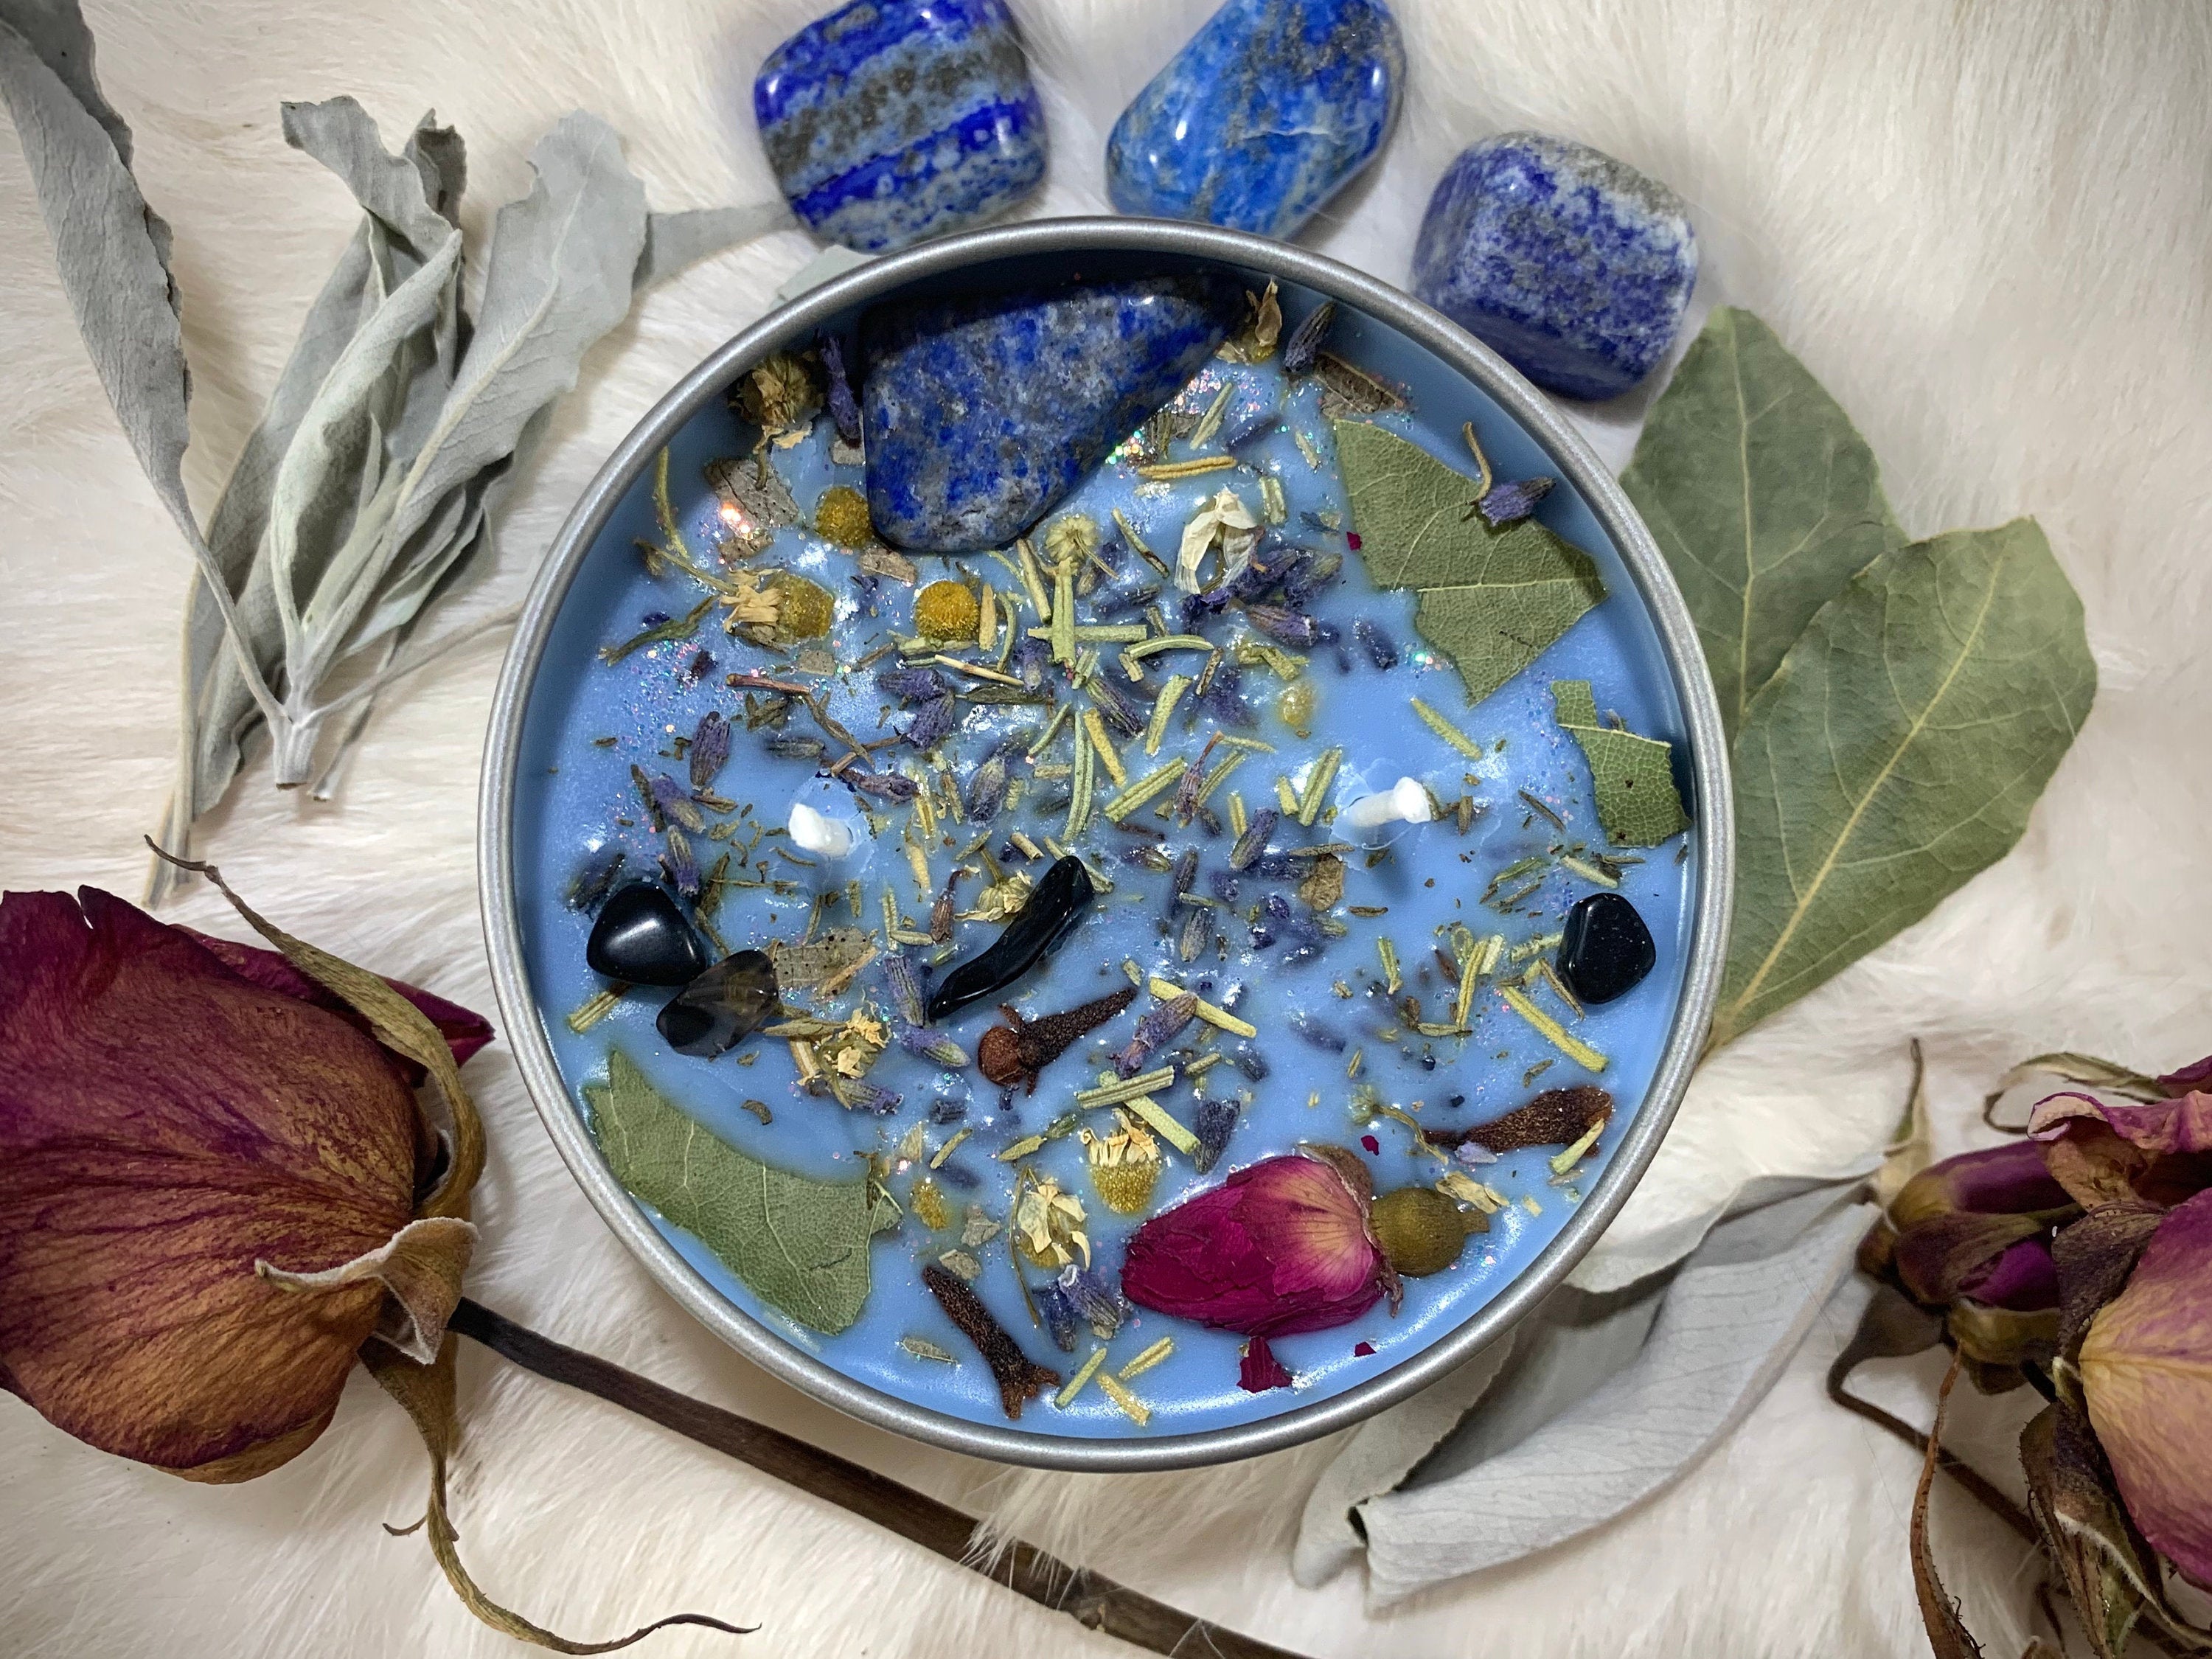 PEACE & HEALING Candle | Herbal Healing